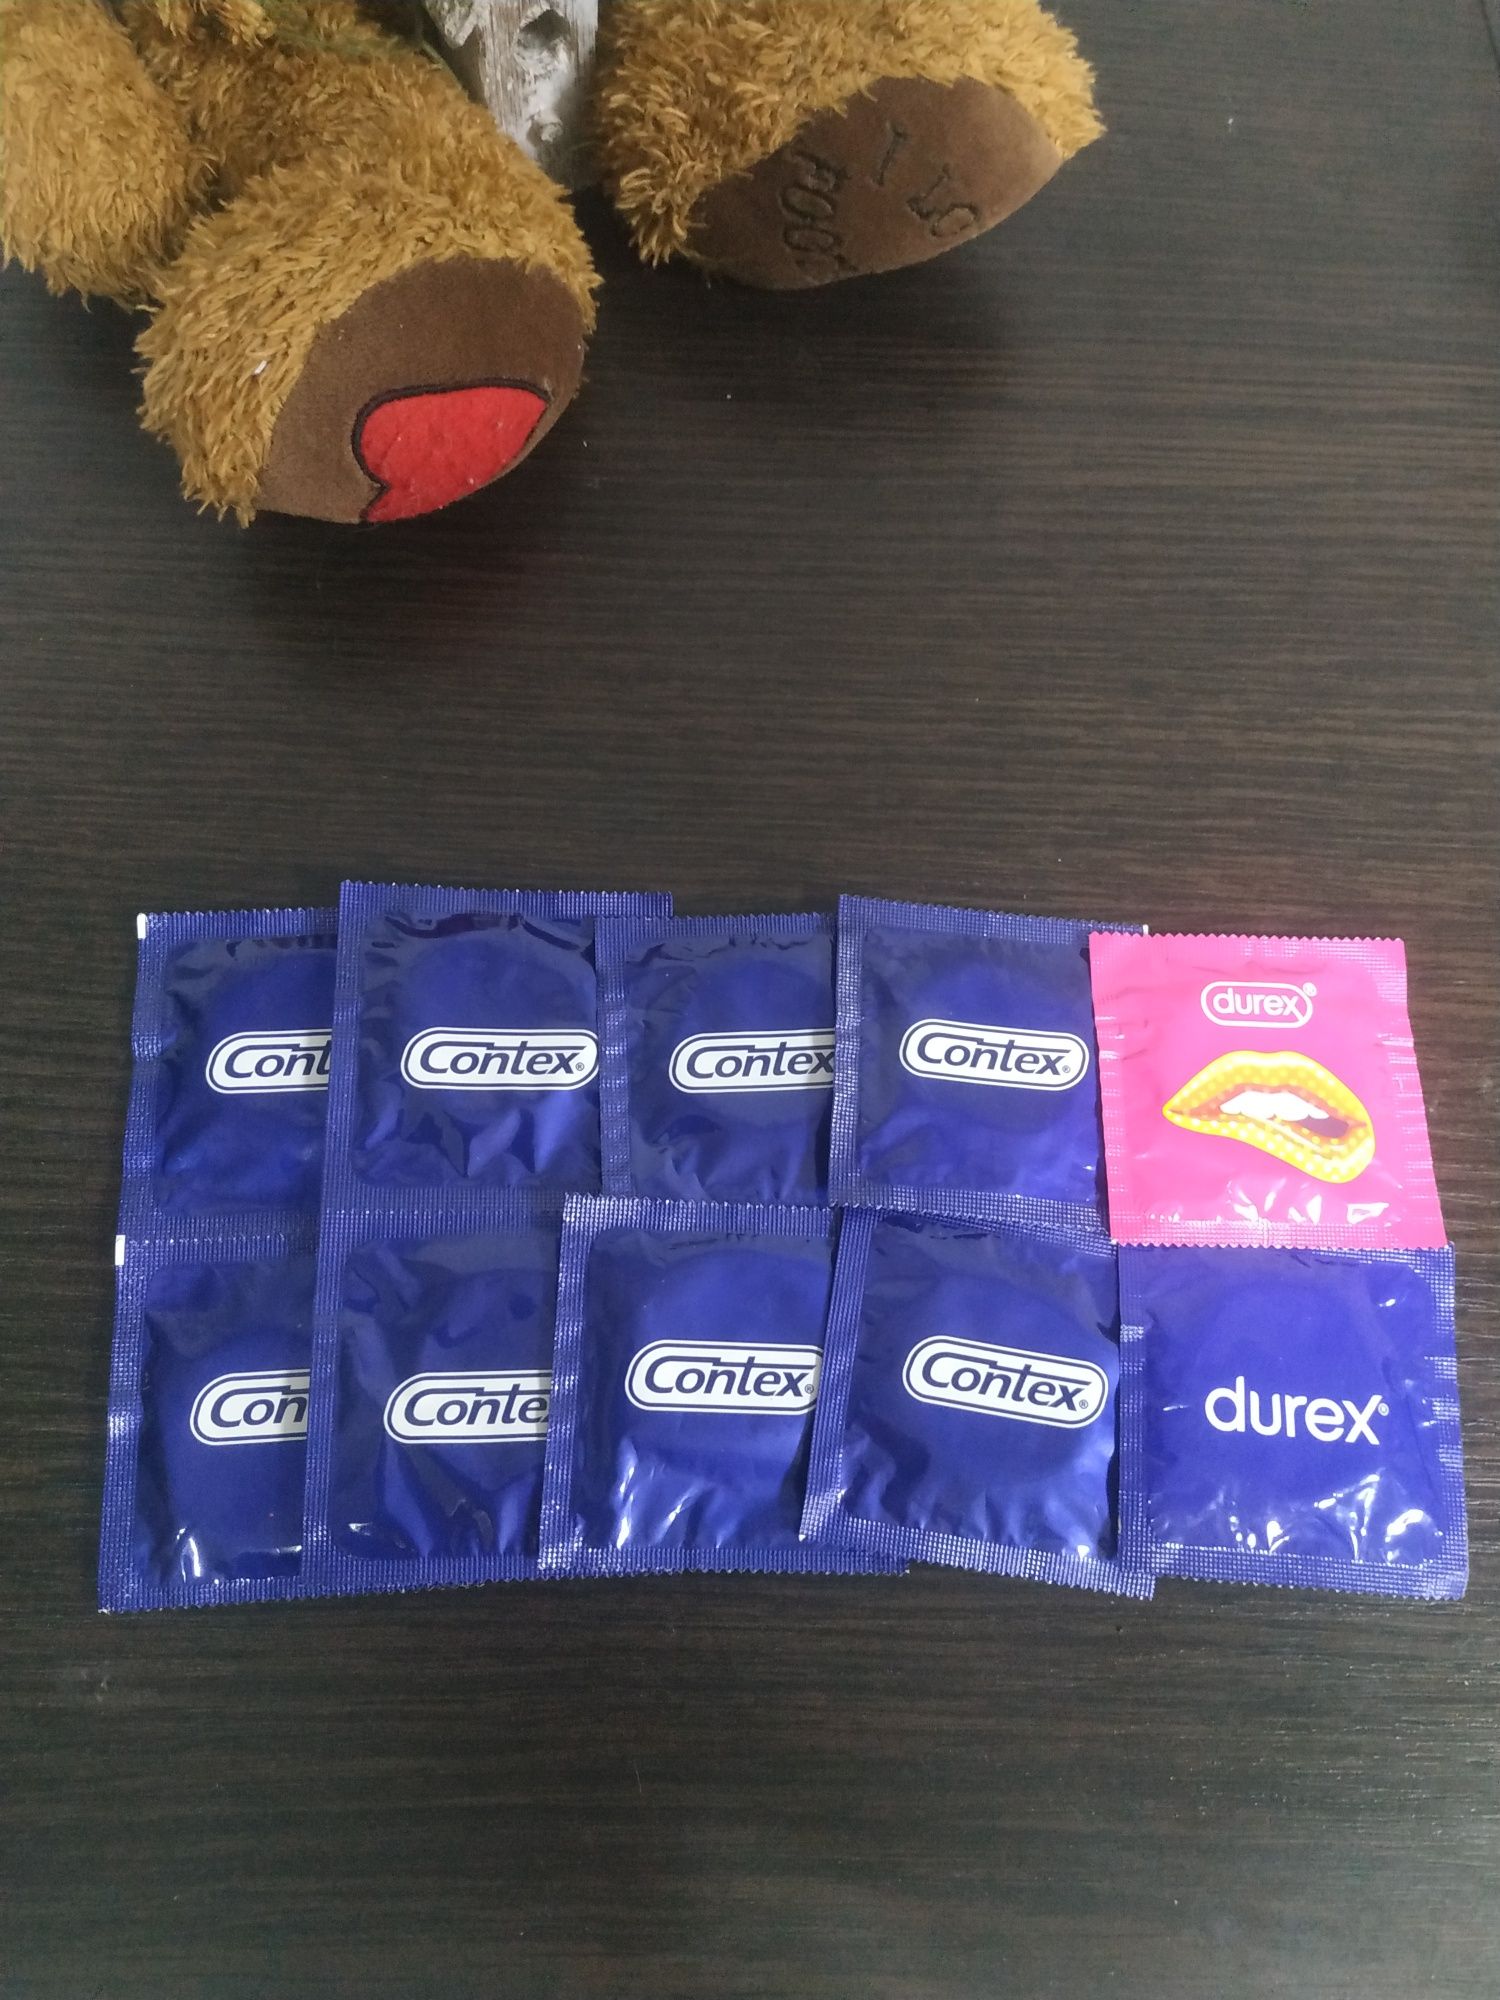 Презервативы 20 штук: contex classic, durex, французские